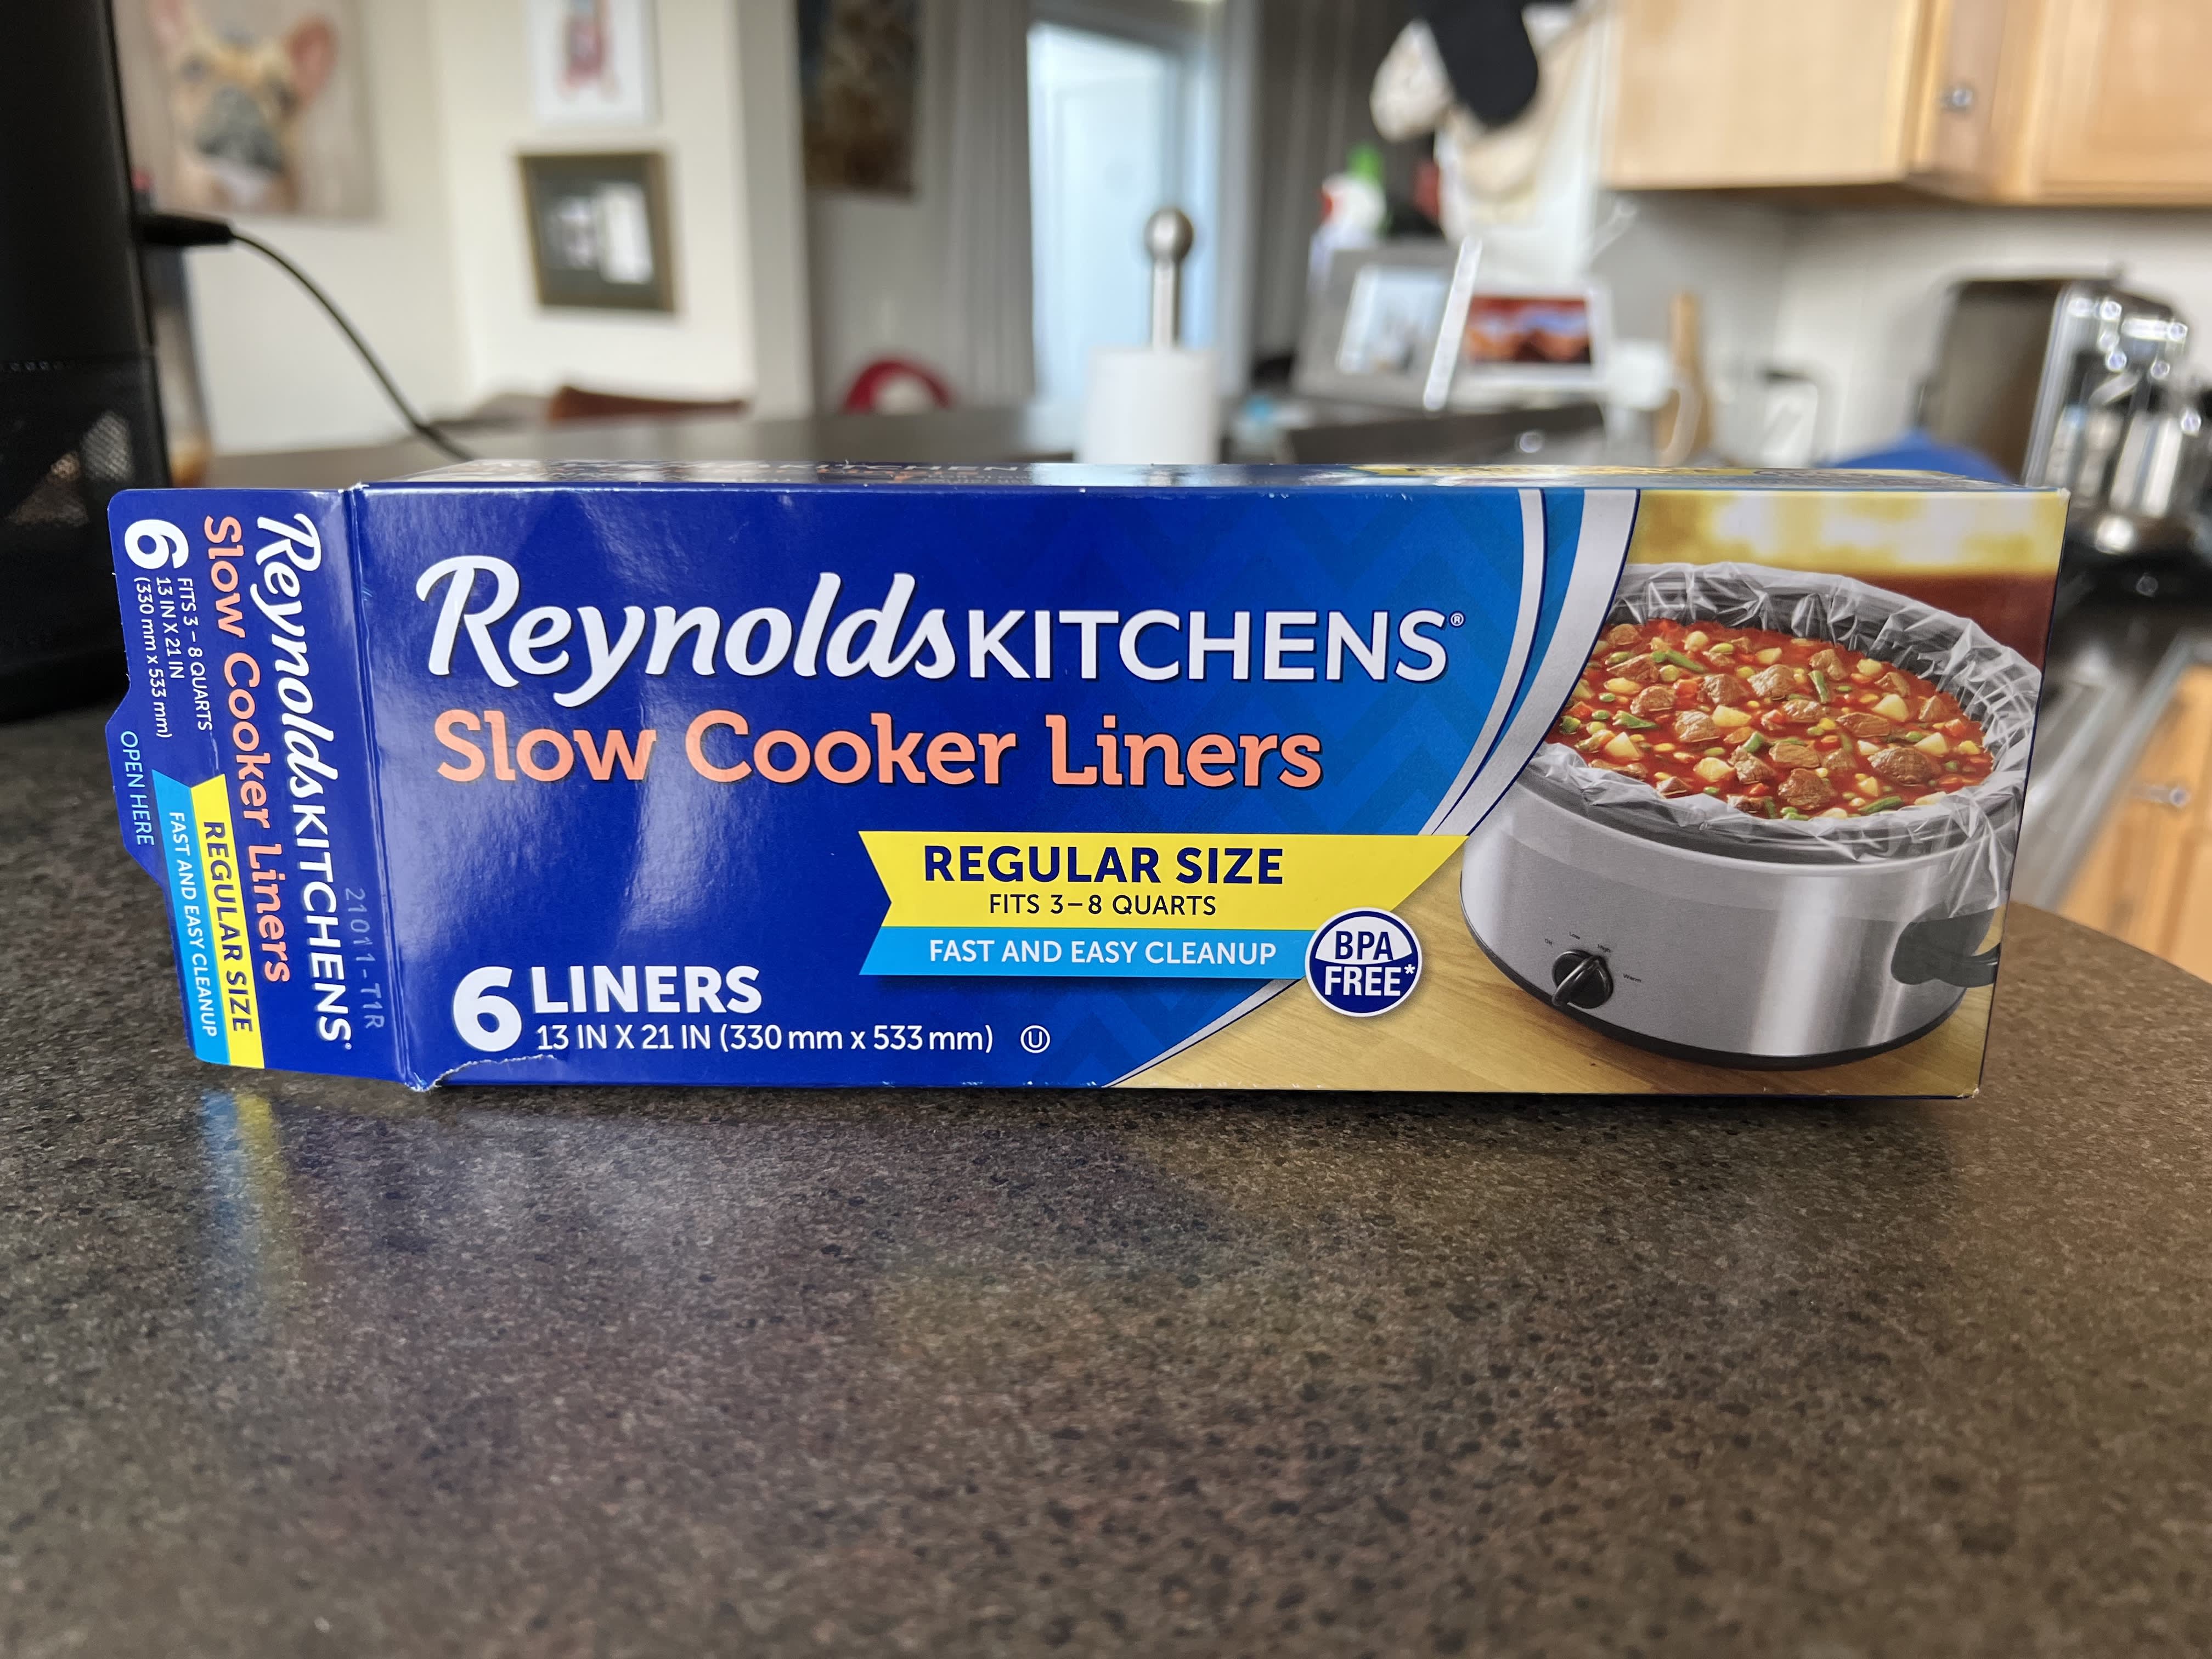 Reynolds Kitchens Slow Cooker Liners (Regular size, 6 Count)